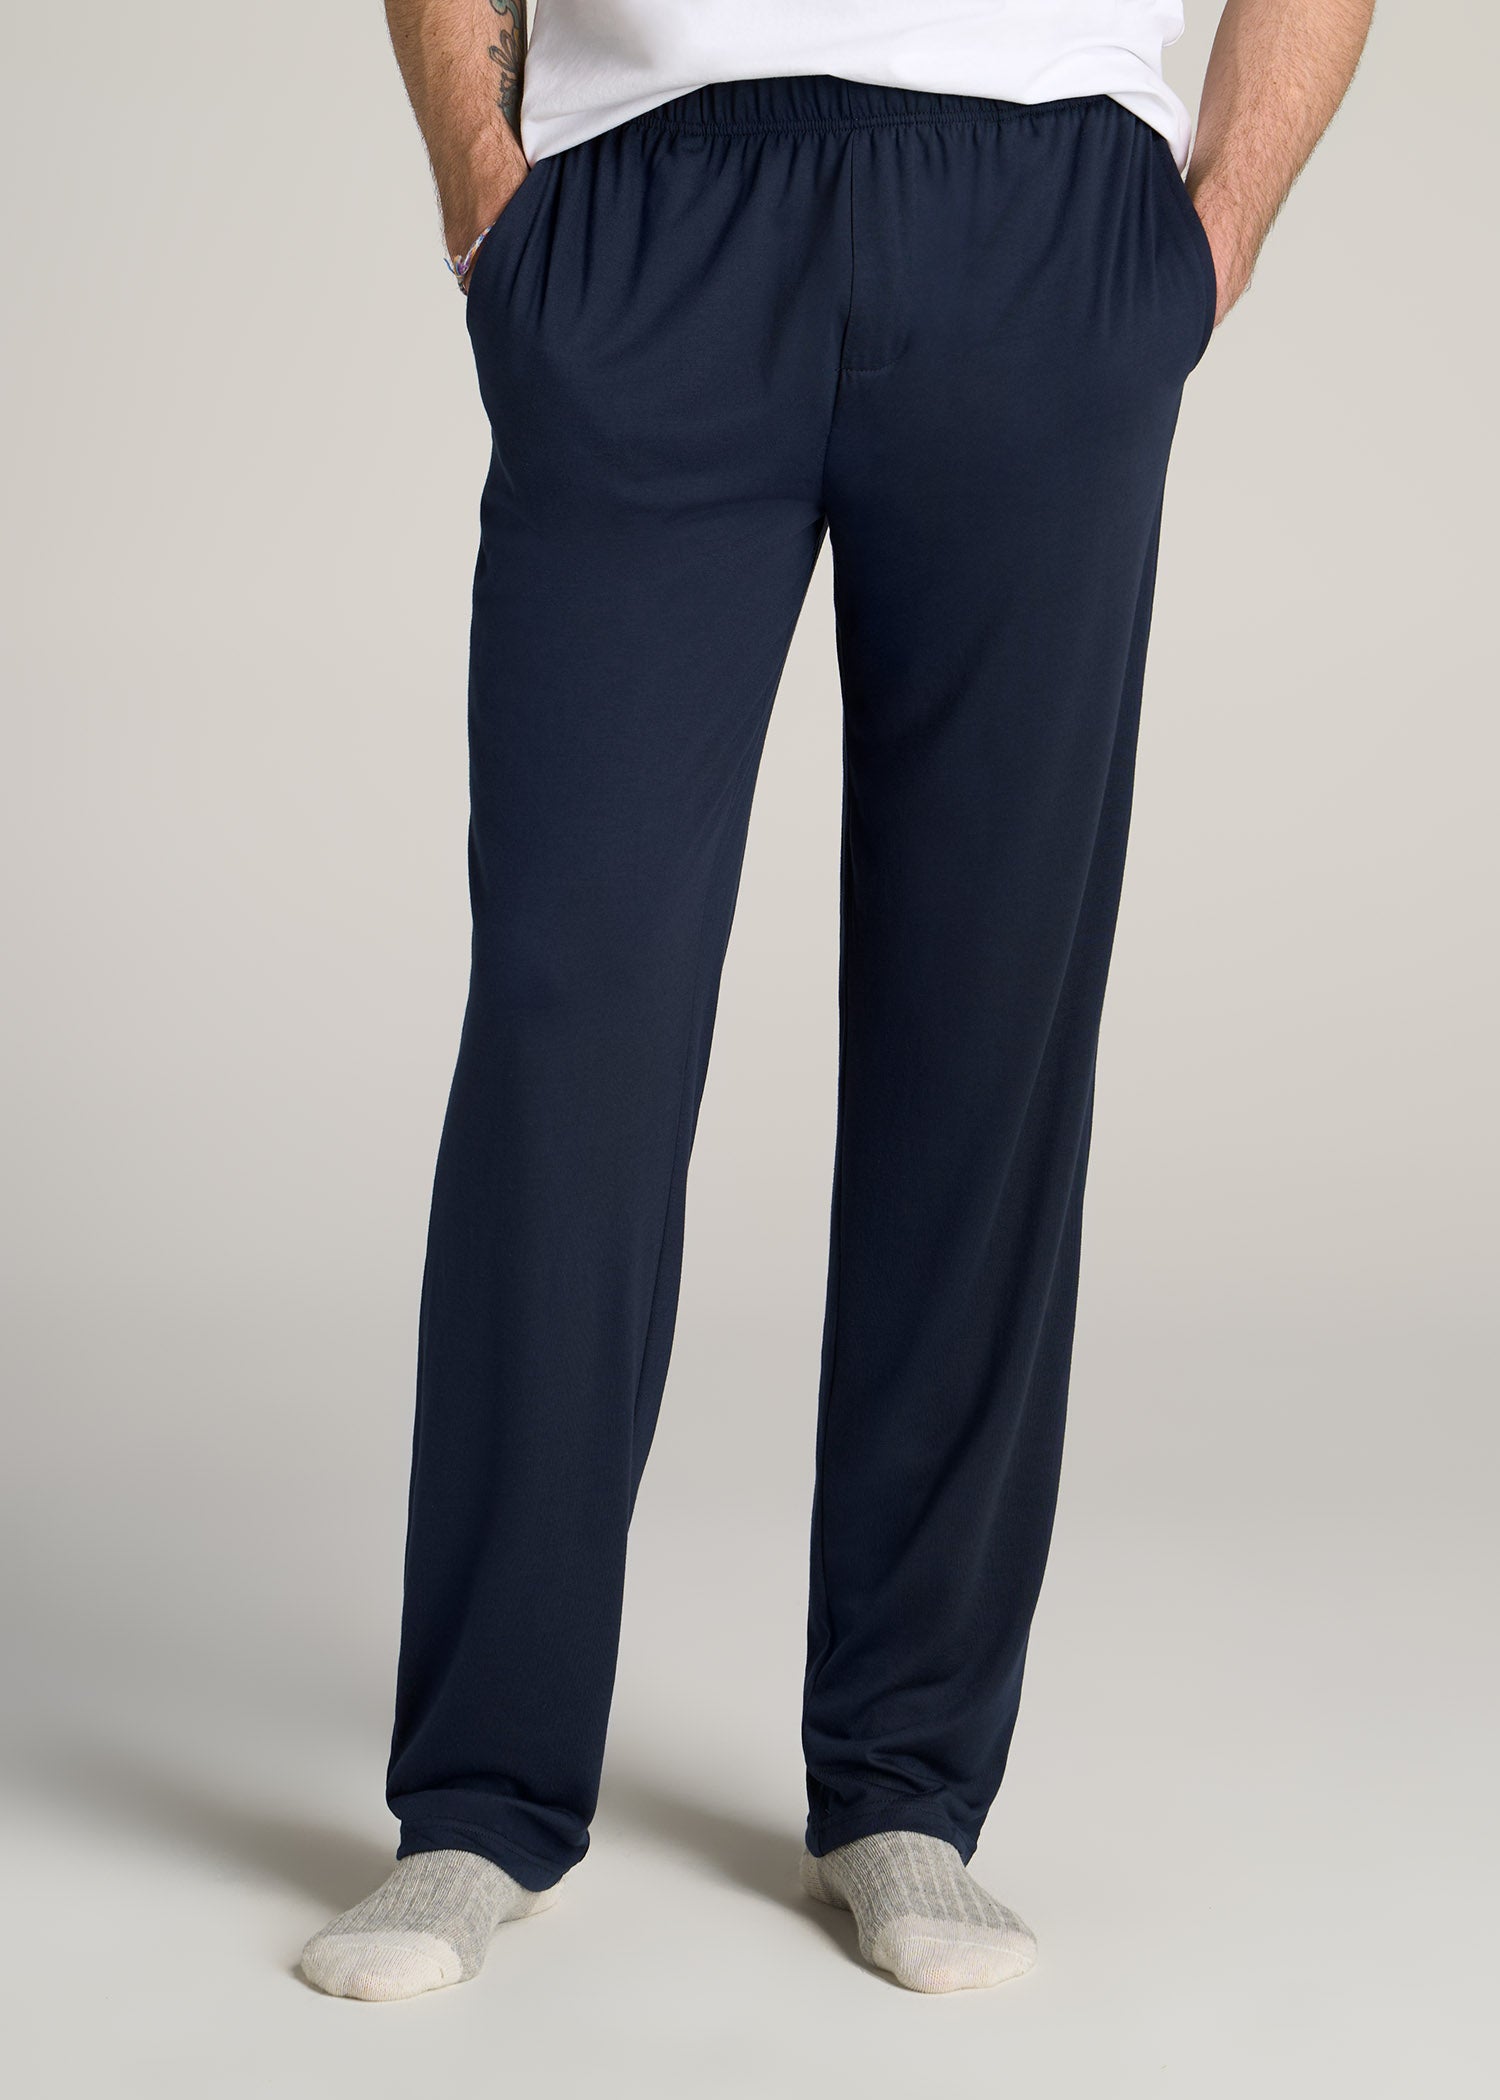 American-Tall-Men-Lounge-Pajama-Pants-Navy-front